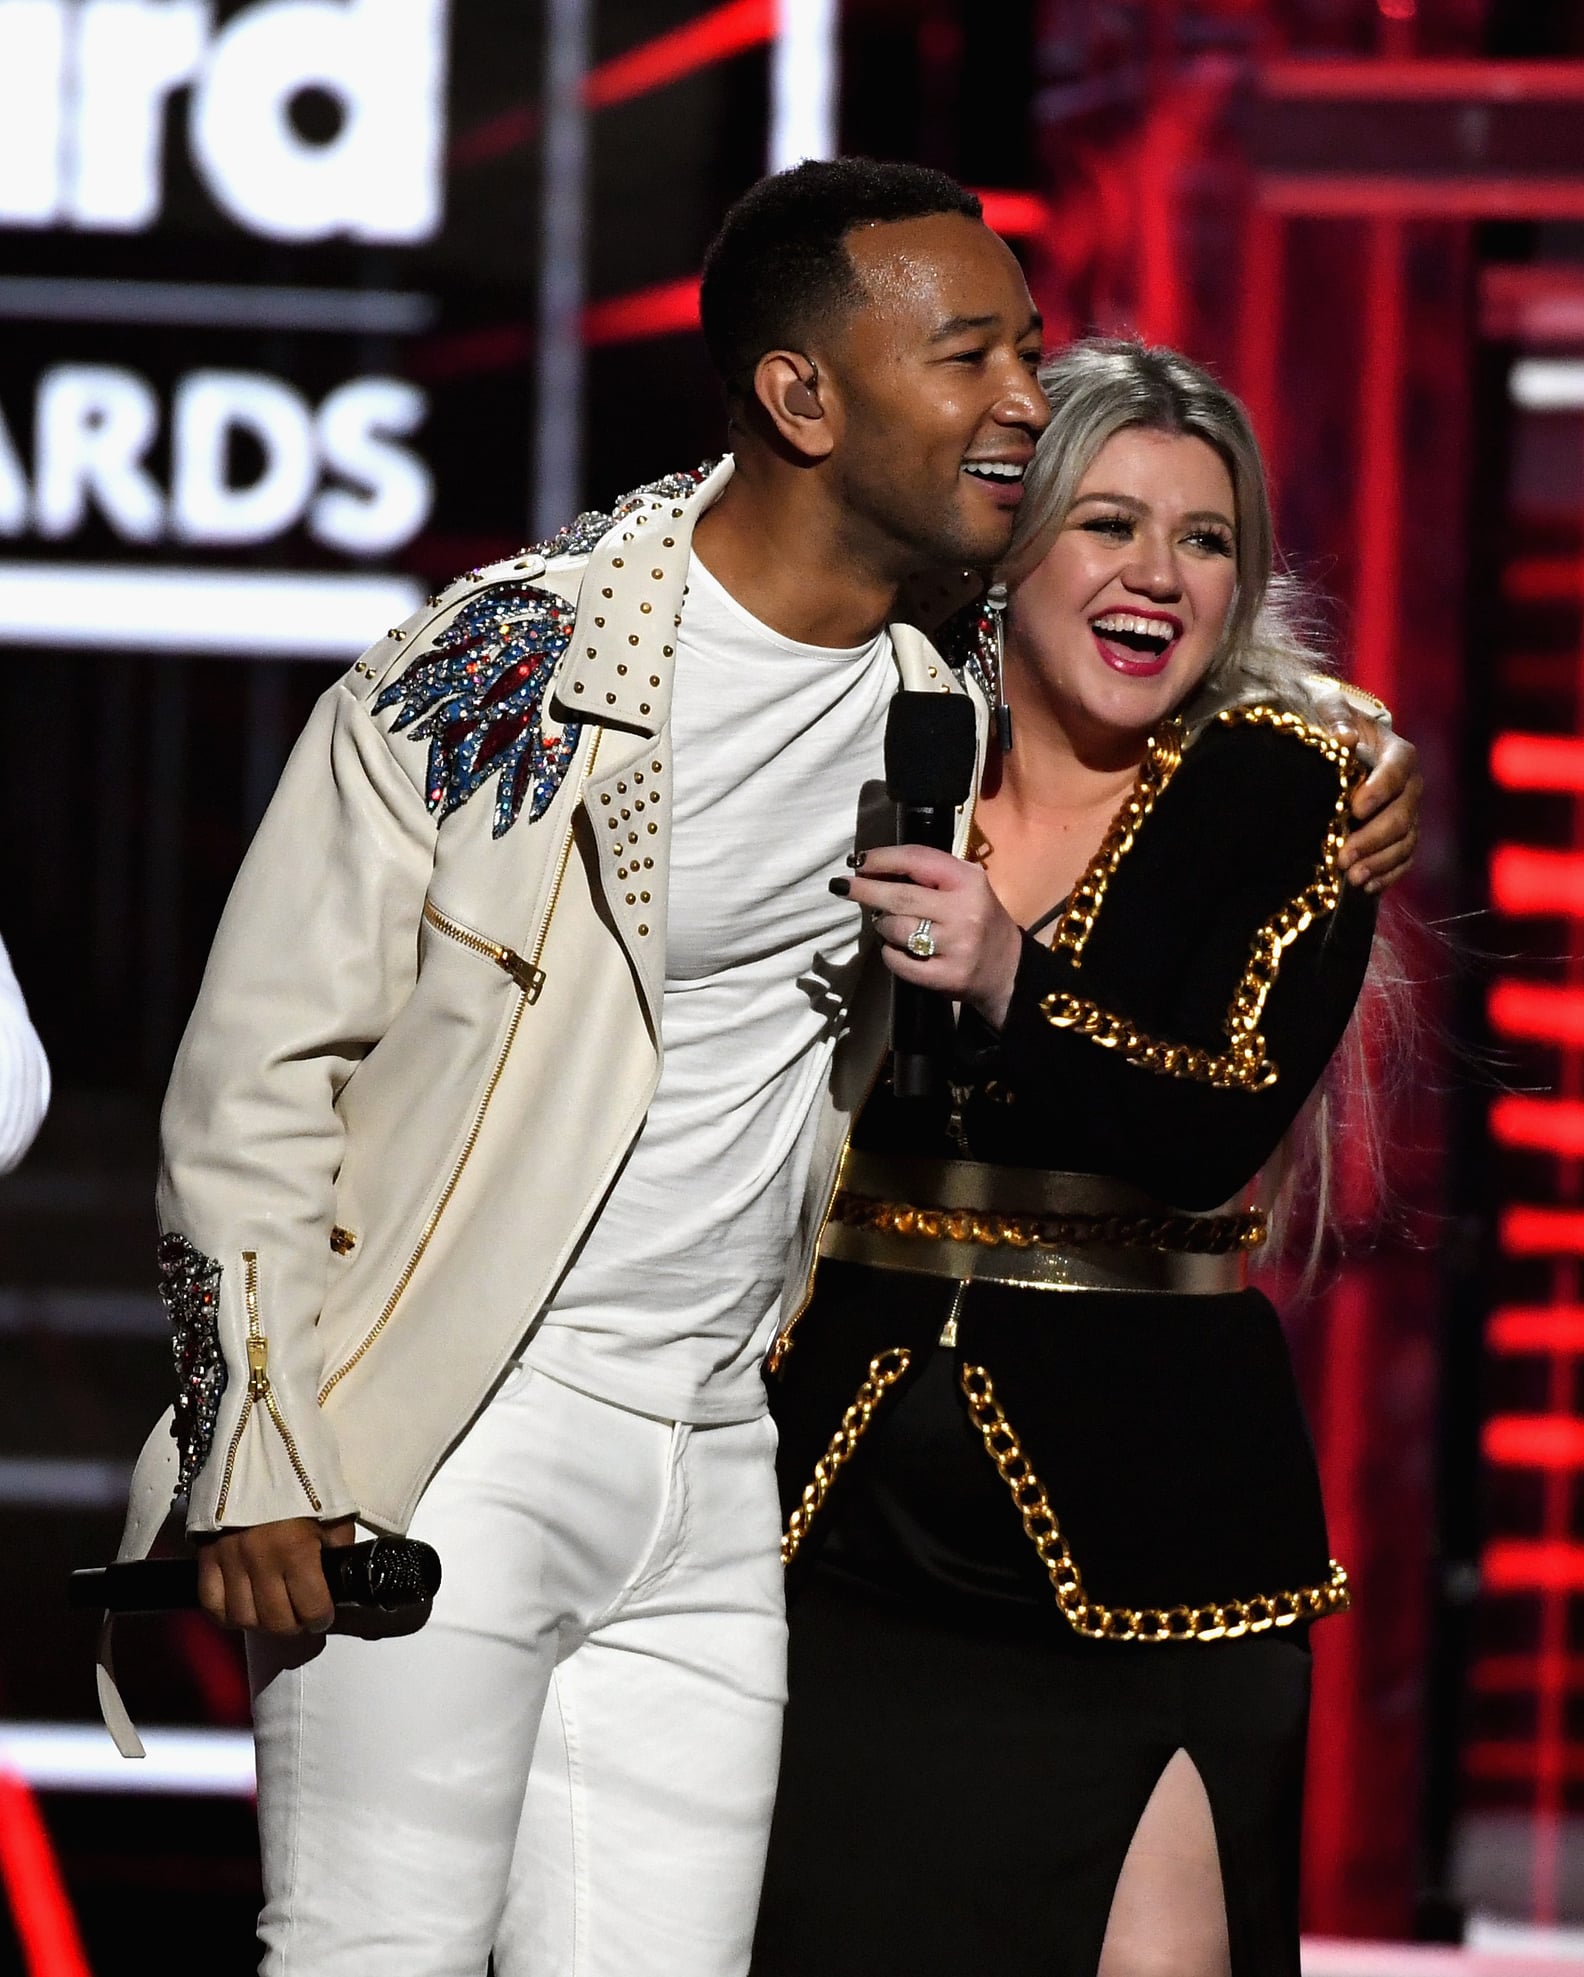 Kelly Clarkson at the Billboard Music Awards 2018 | POPSUGAR Celebrity